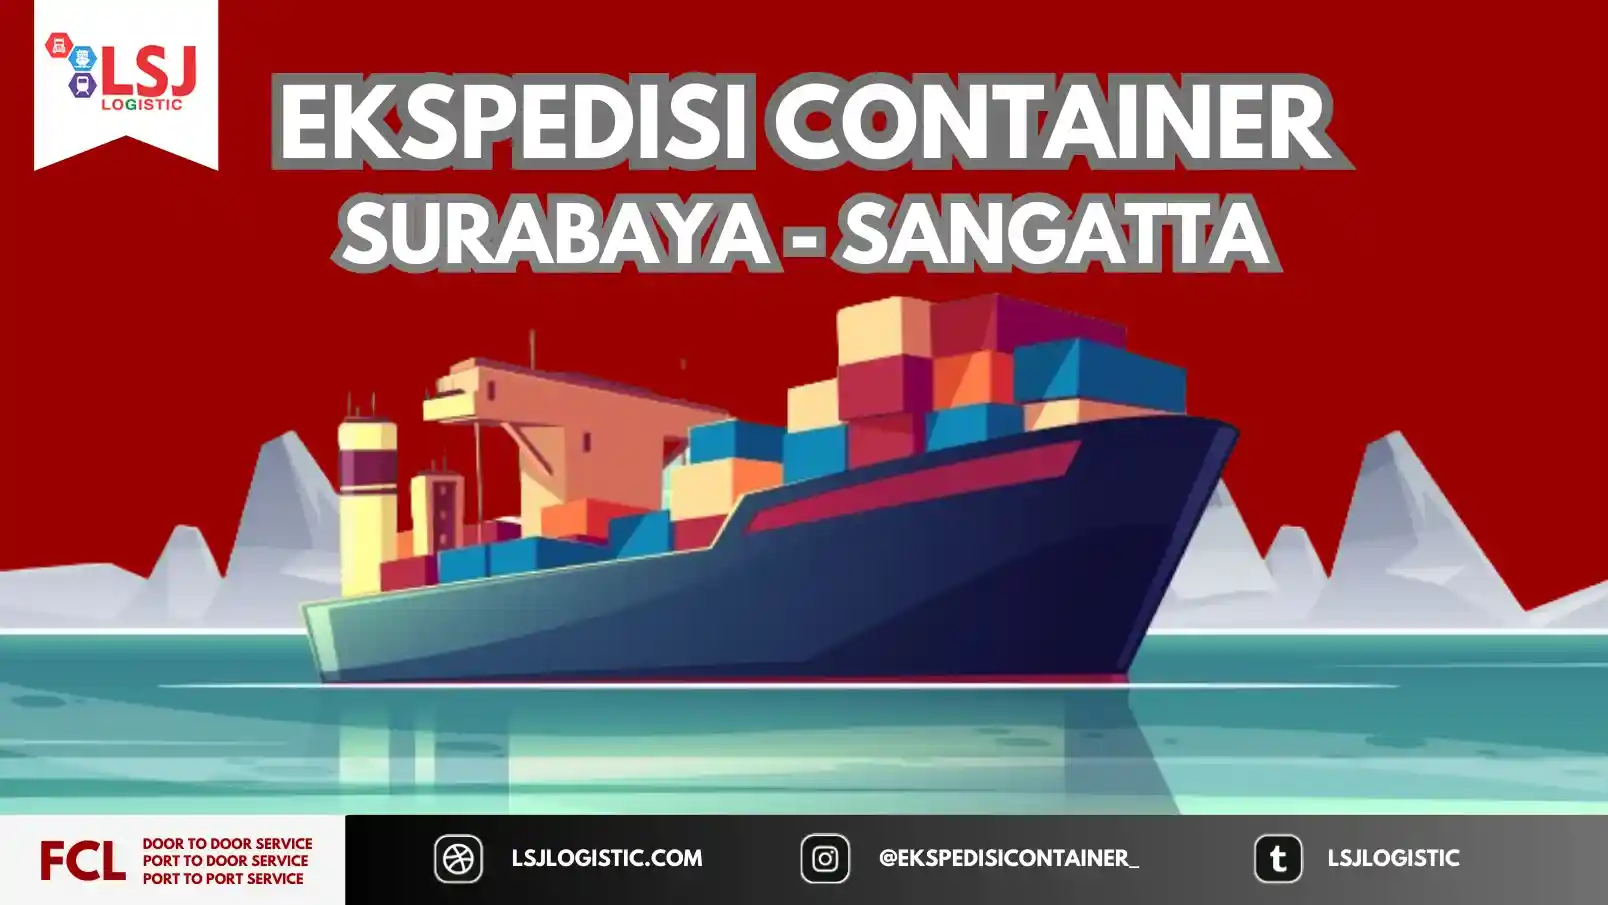 Ongkos Kirim Container Surabaya Sangatta